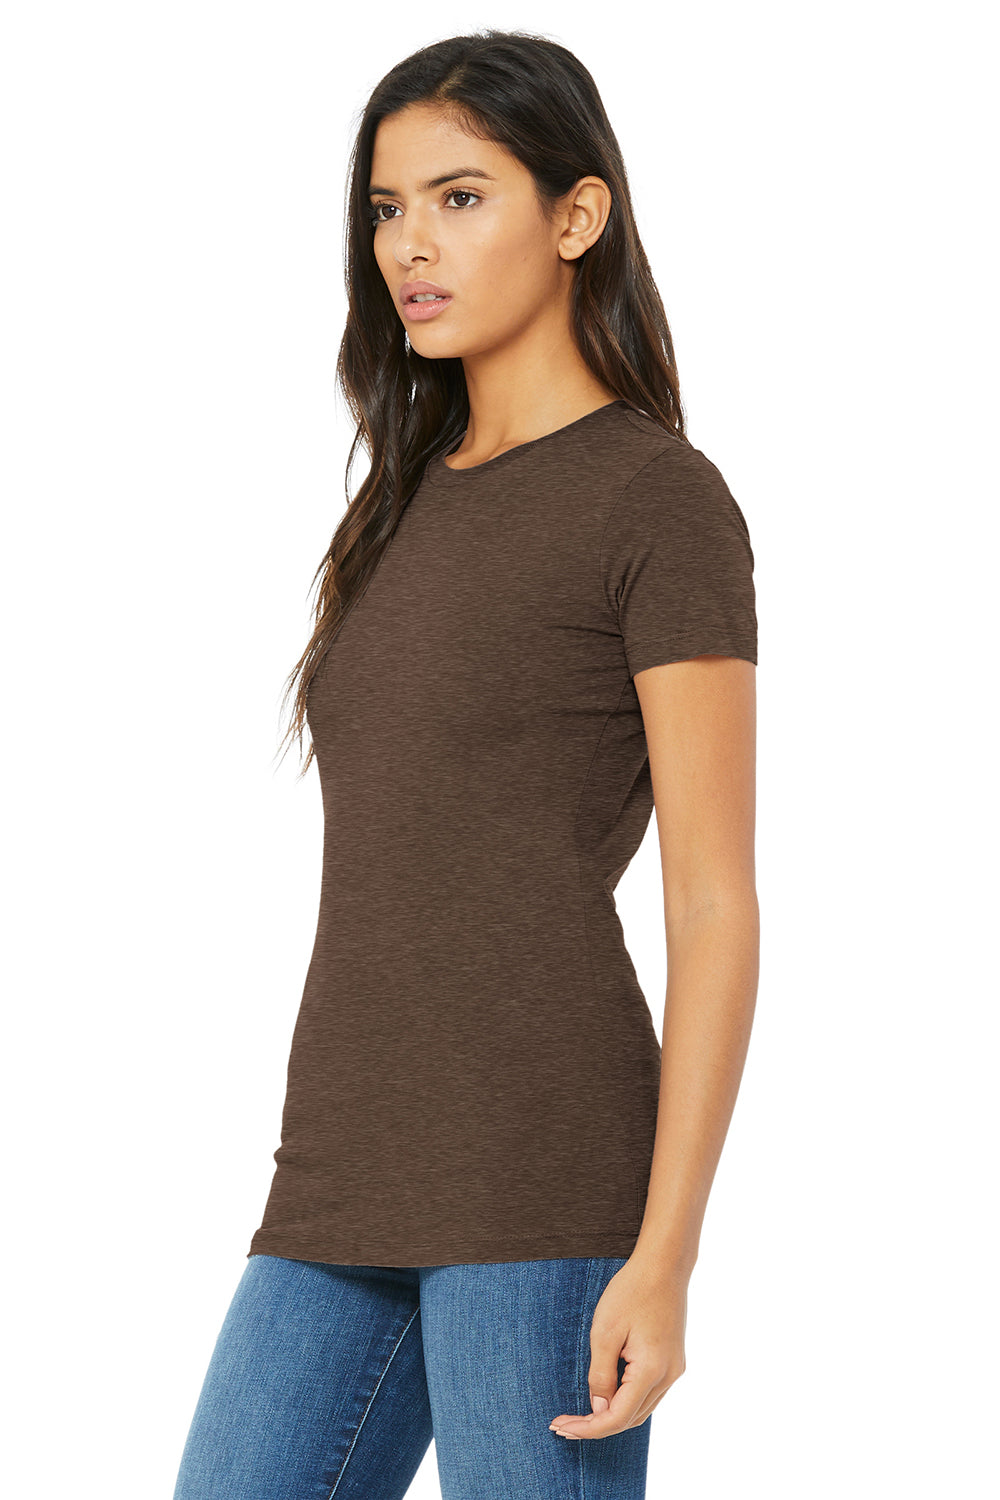 Bella + Canvas BC6004/6004 Womens The Favorite Short Sleeve Crewneck T-Shirt Heather Brown Model 3Q